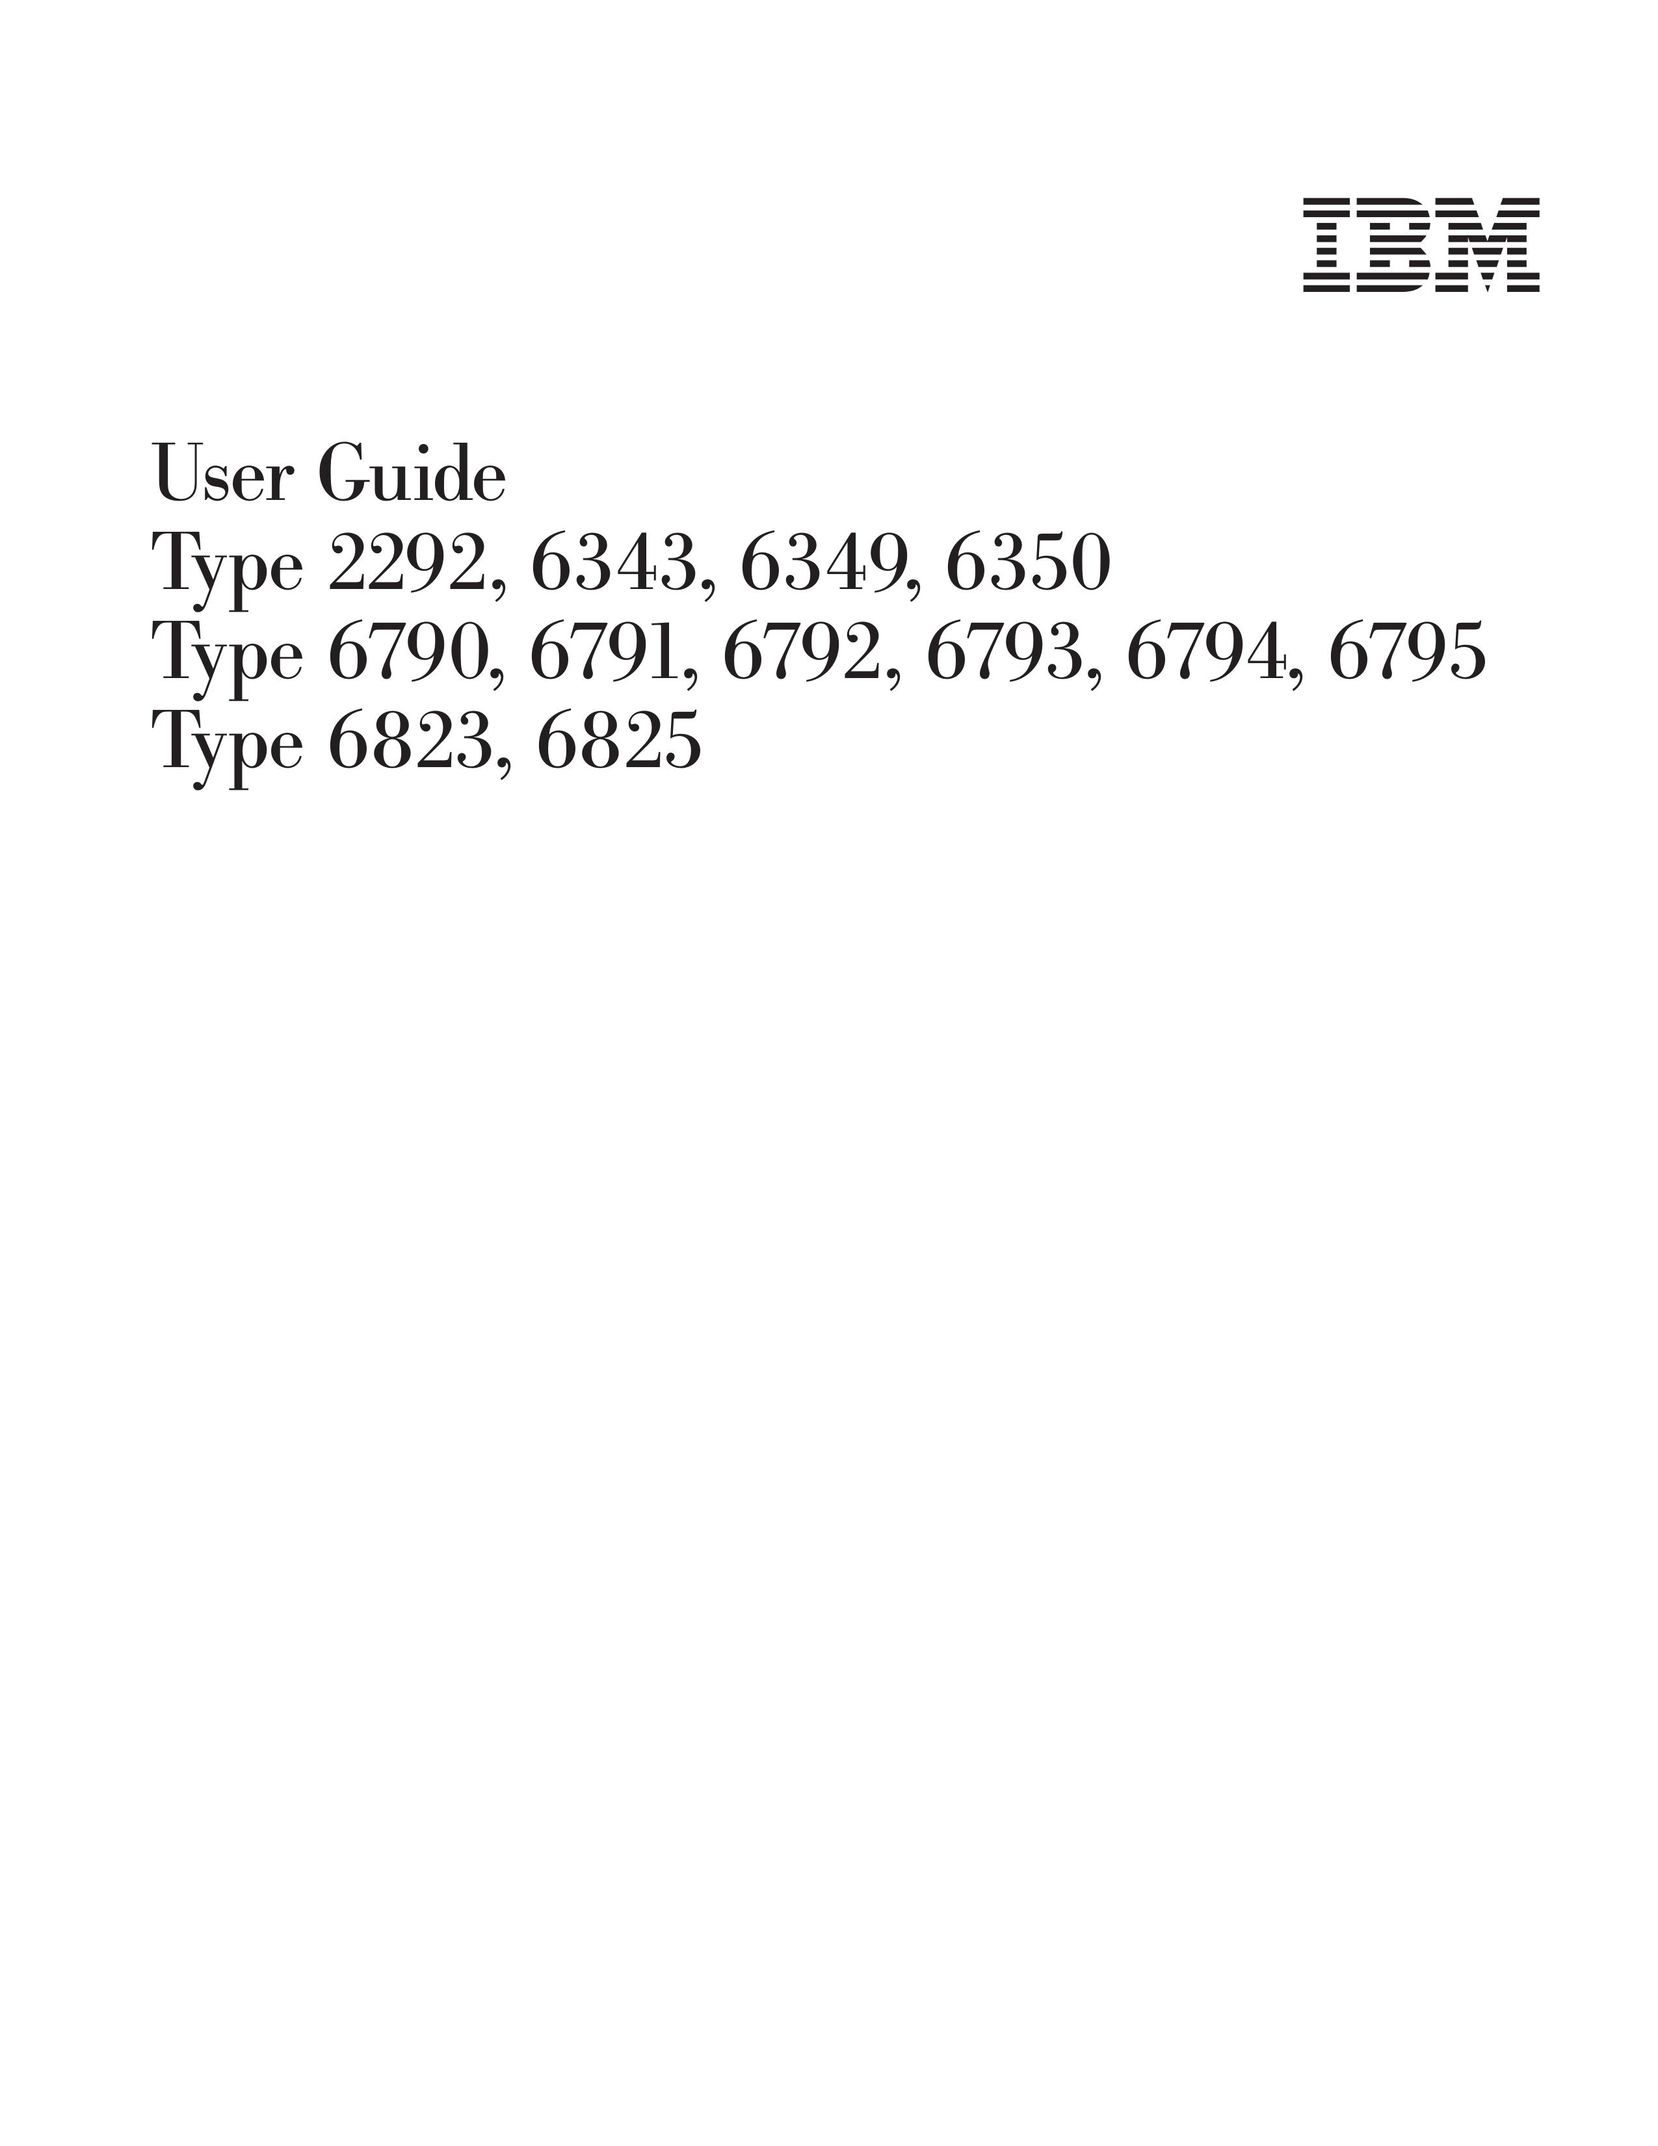 IBM Partner Pavilion 6791 Personal Computer User Manual